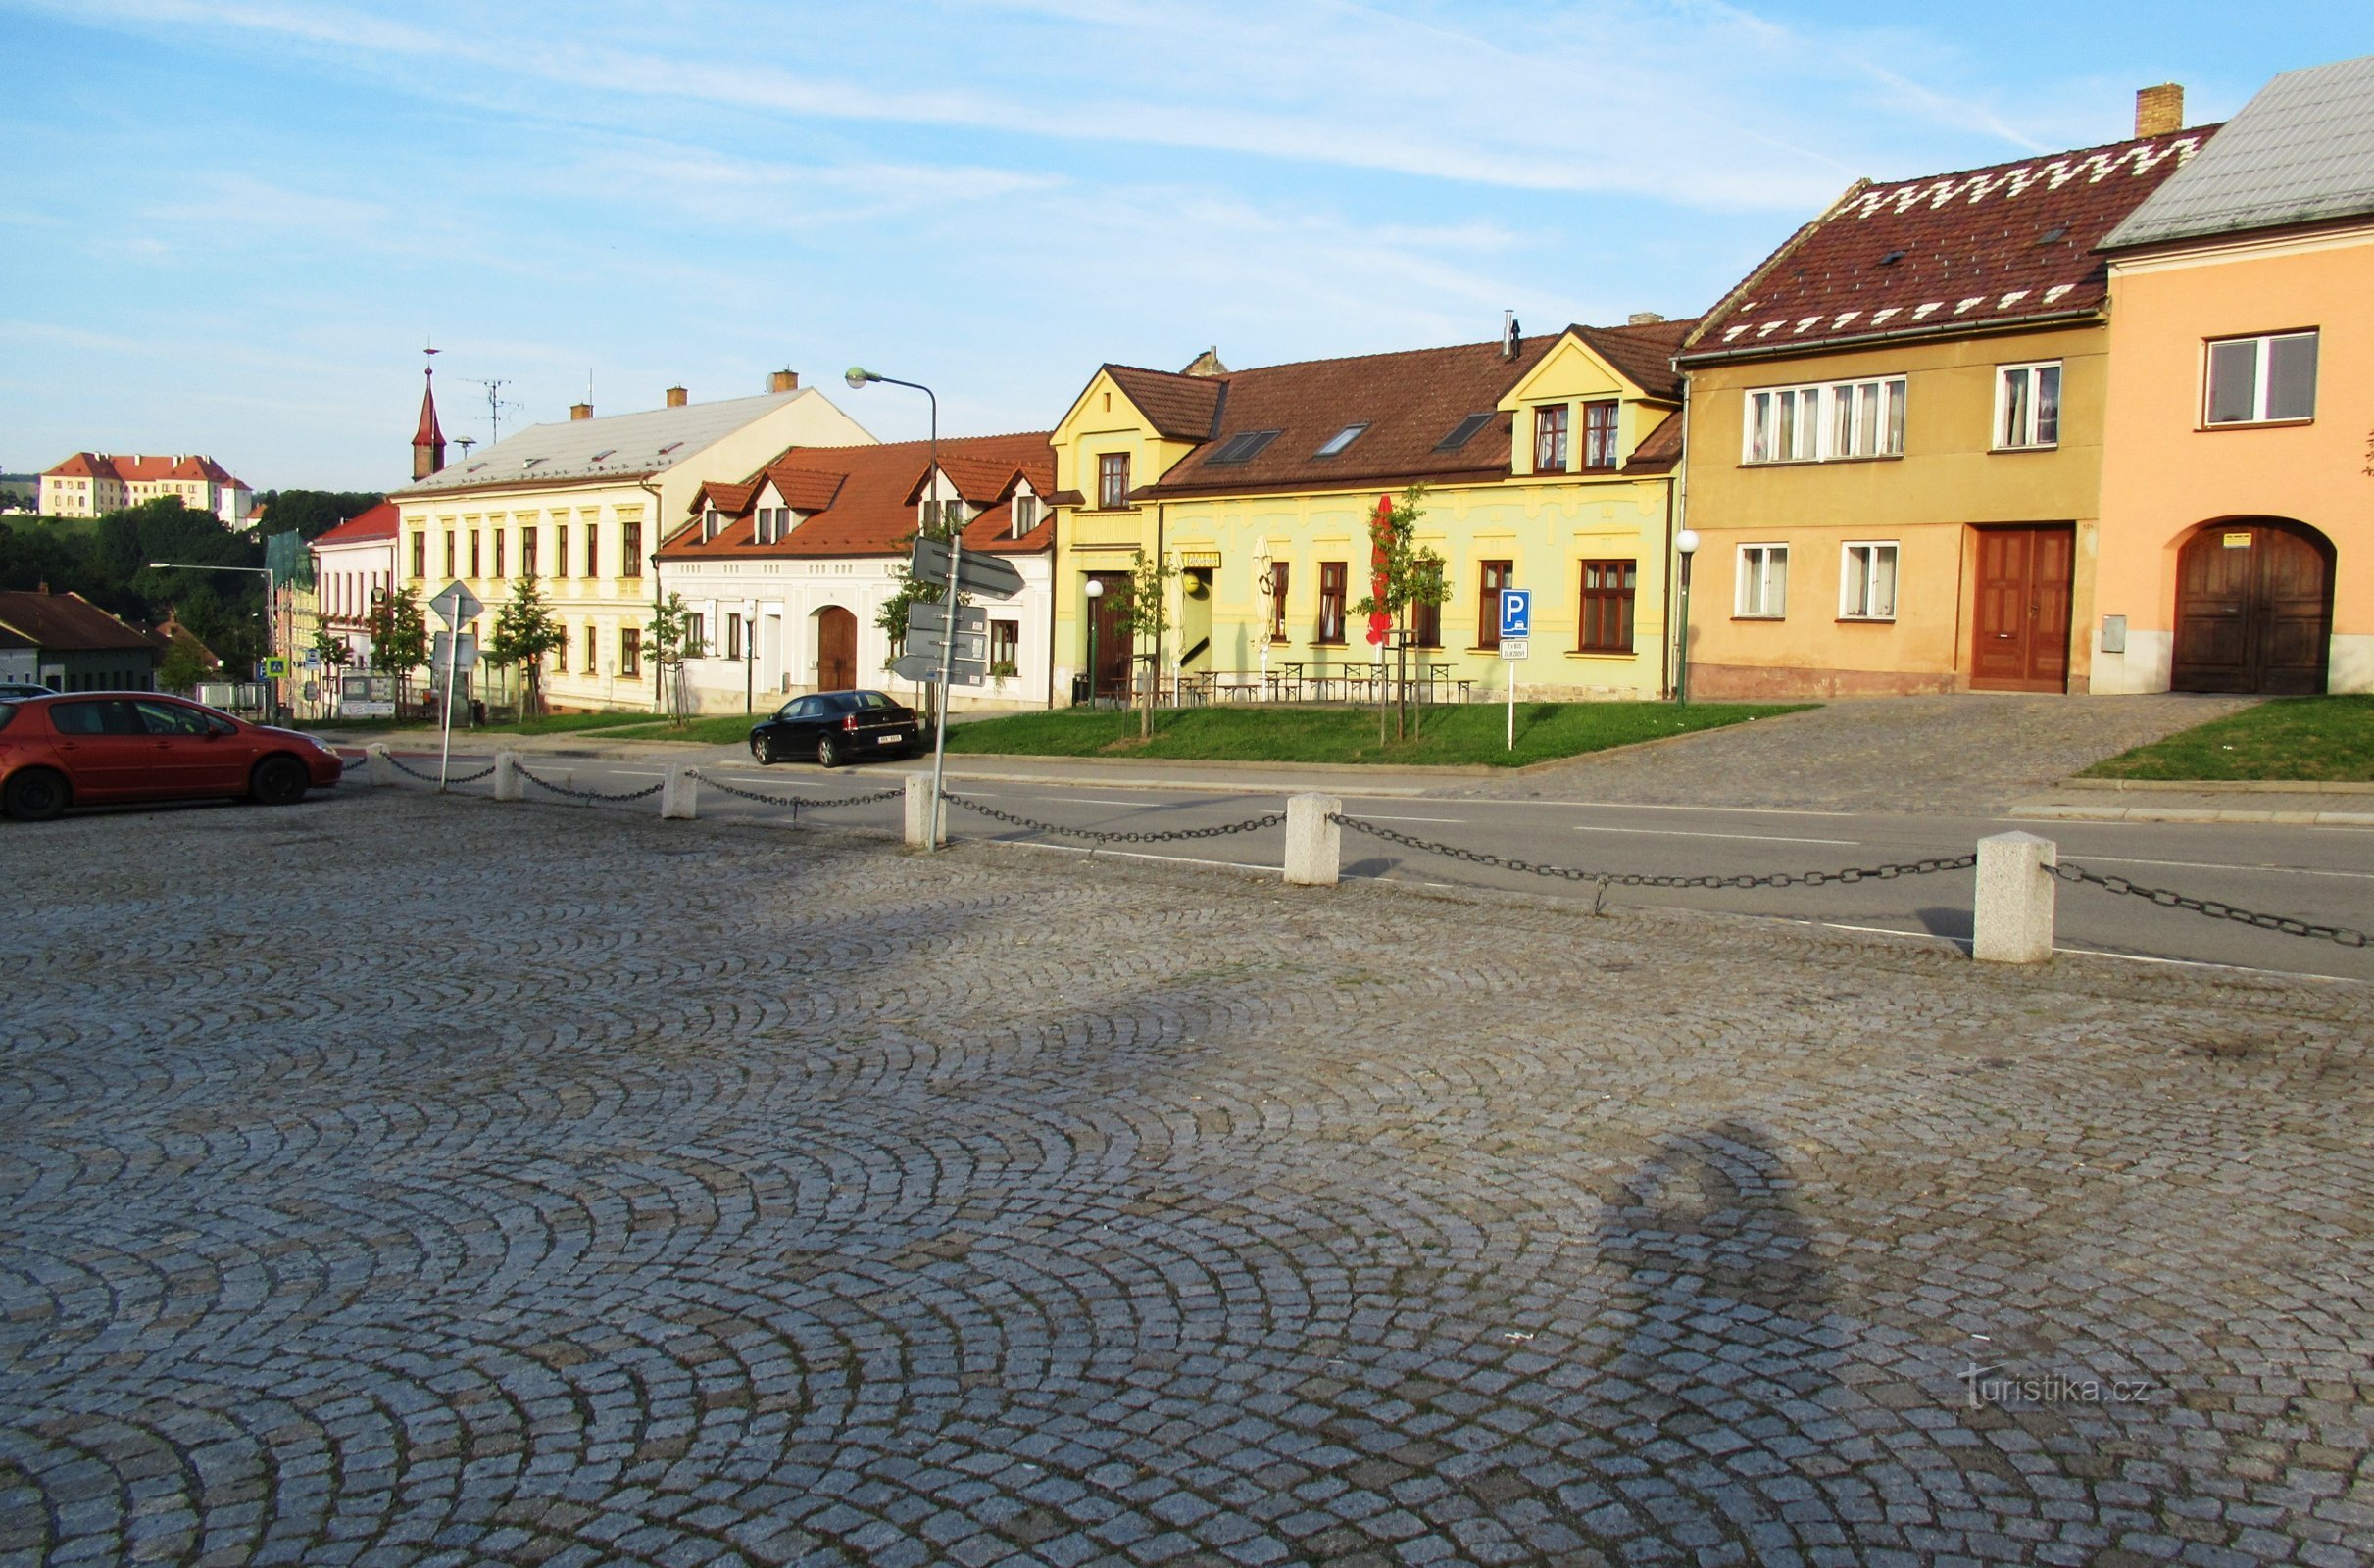 Plac Kunsztacki